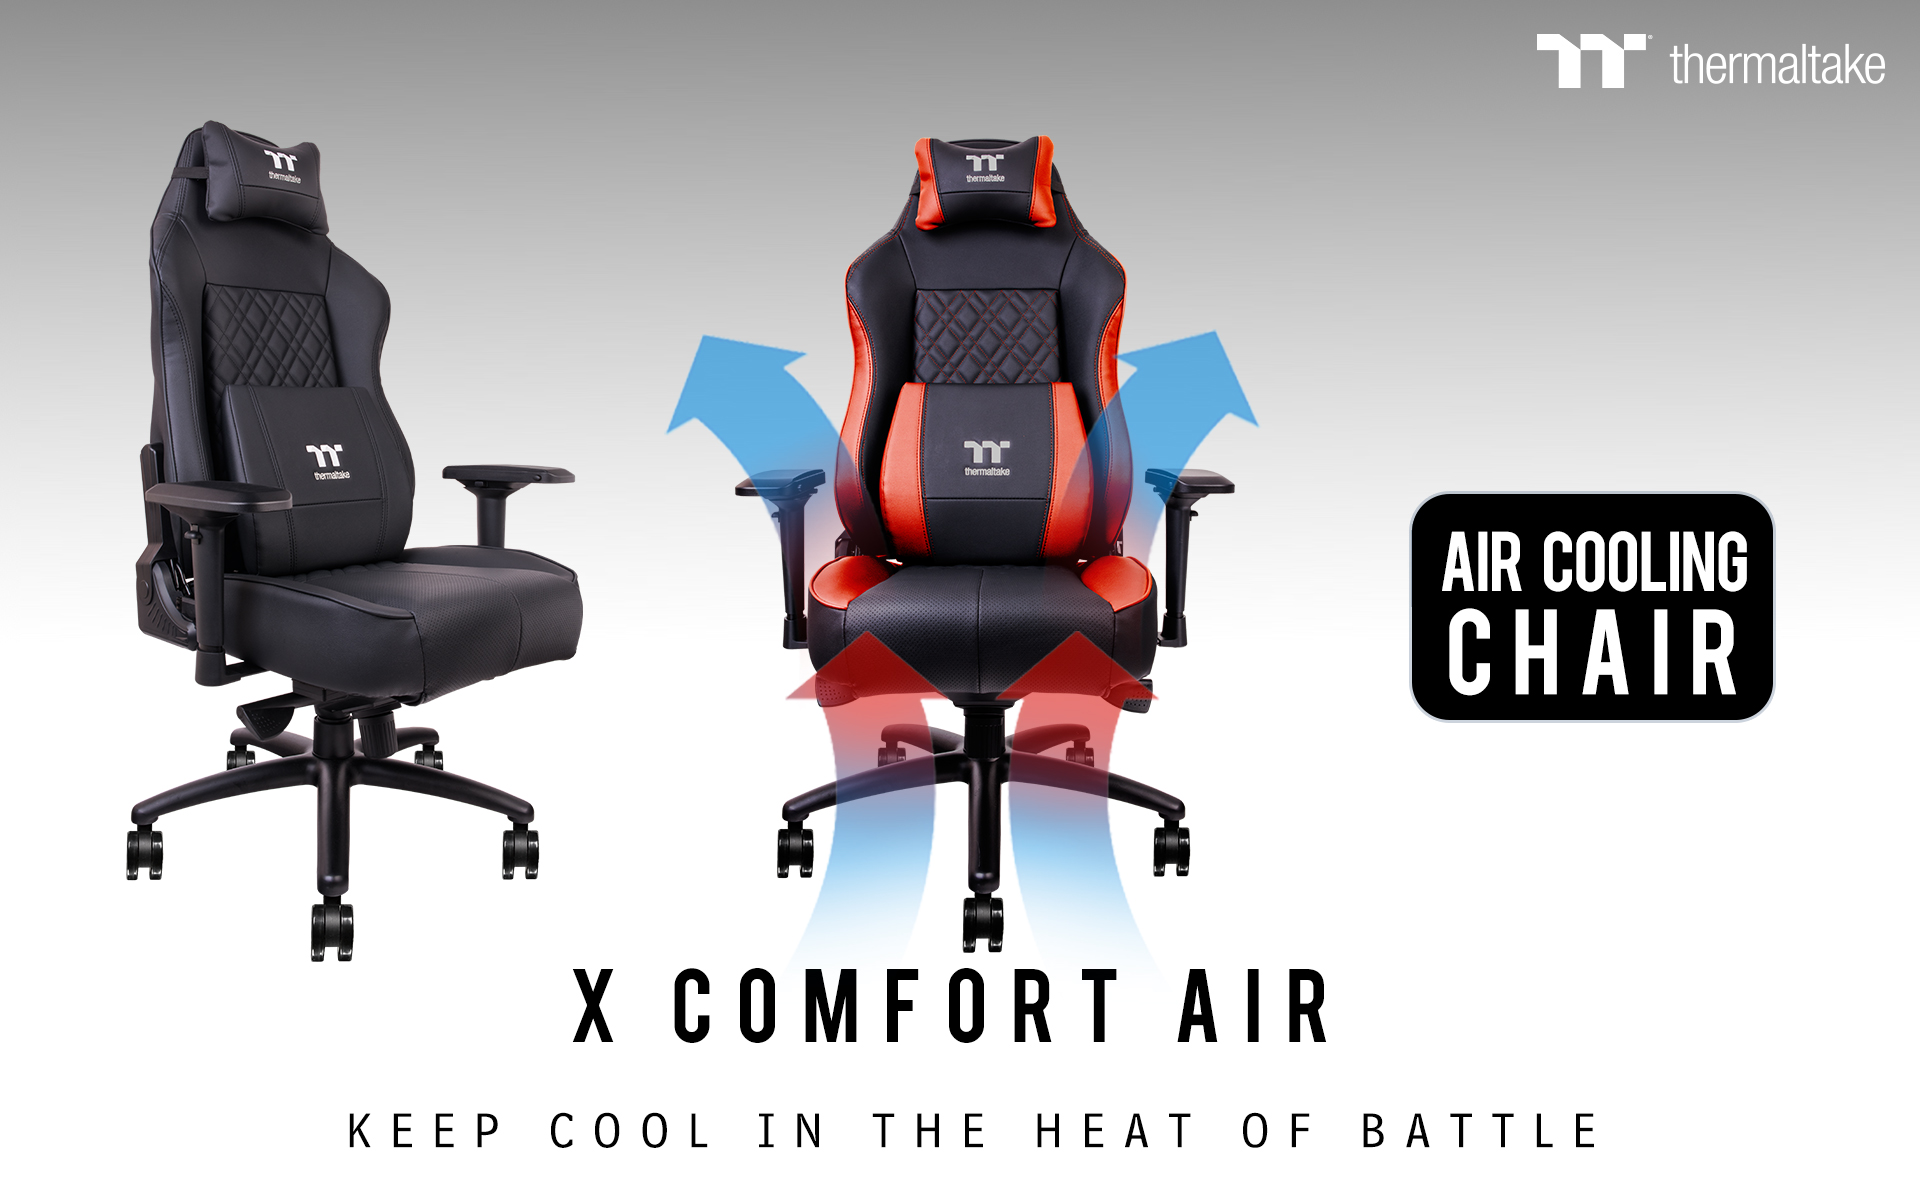 thermaltake gaming tt esports launches x comfort air gaming chair Tt eSPORTS เปิดตัวเก้าอี้เกมส์มิ่งตัวแรกของโลก X COMFORT AIR Cooling Professional Gaming Chair ที่ใช้ระบบระบายอากาศอย่างเย็นสบายจัดเต็มเพื่อคอเกมส์มิ่งตัวจริง